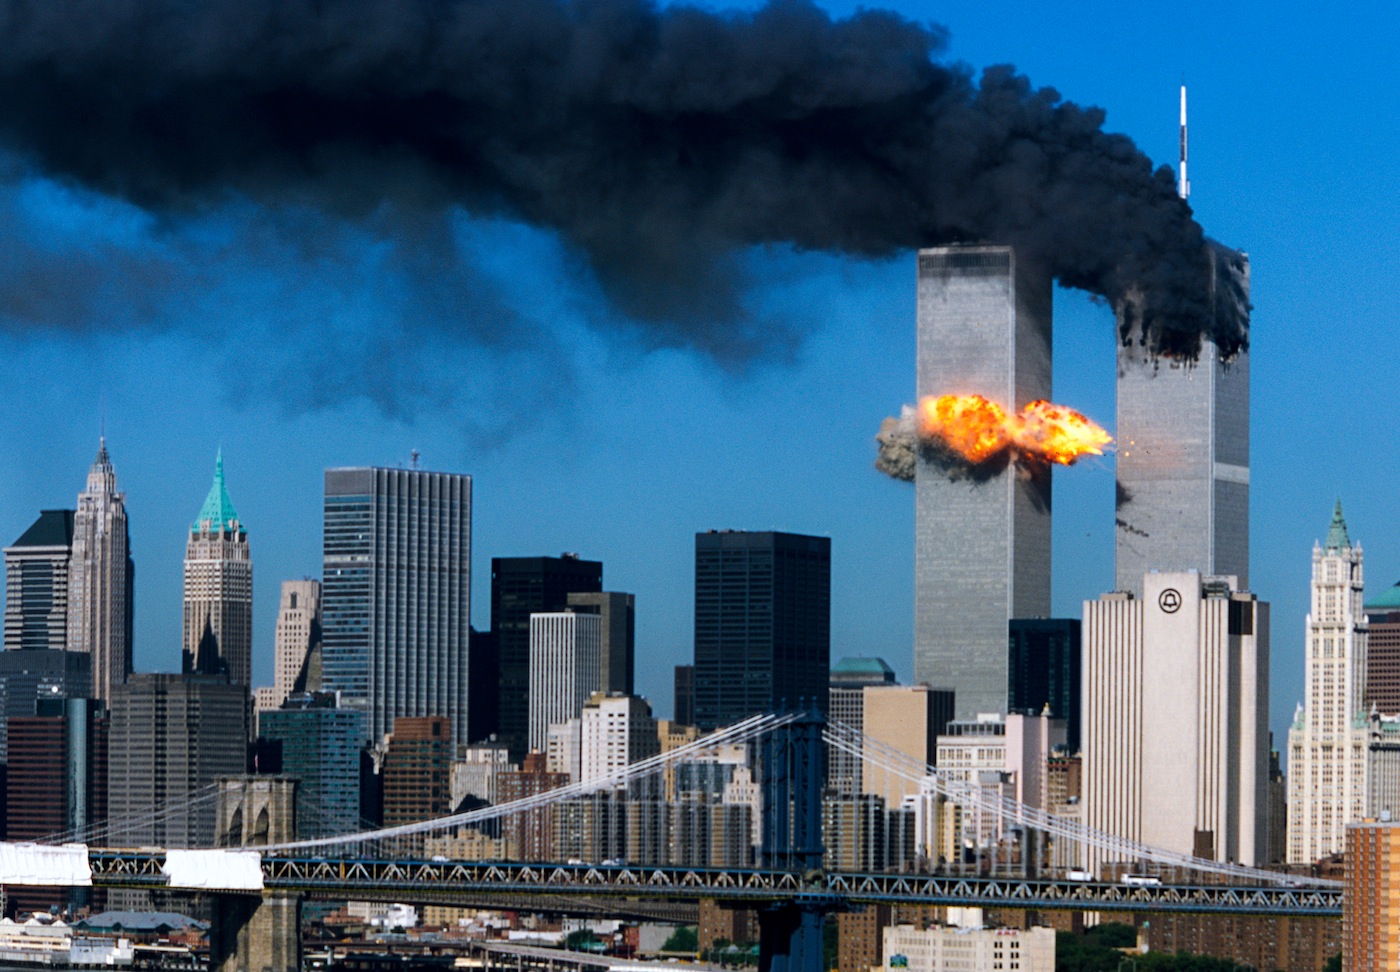 9/11 Word Trade Center Attack